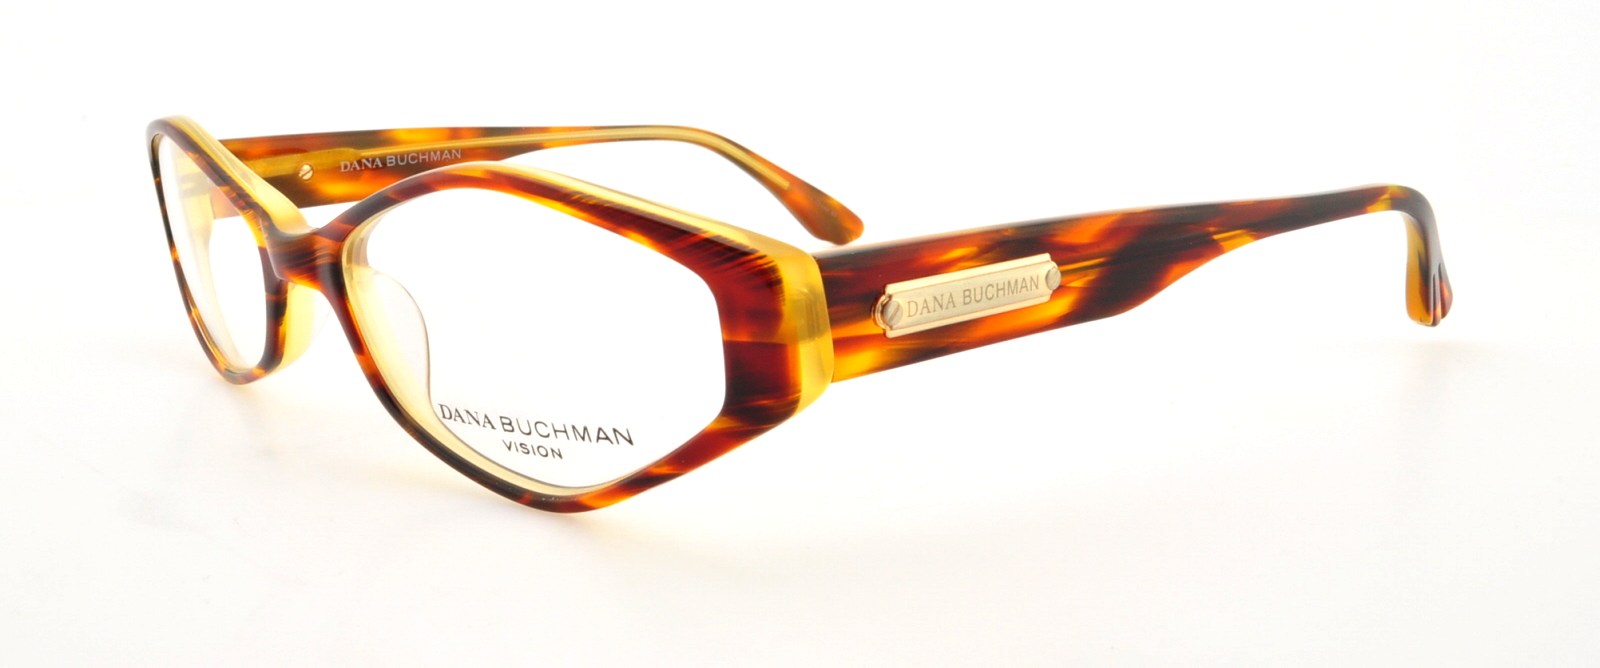 Picture of Dana Buchman Eyeglasses SHELBY